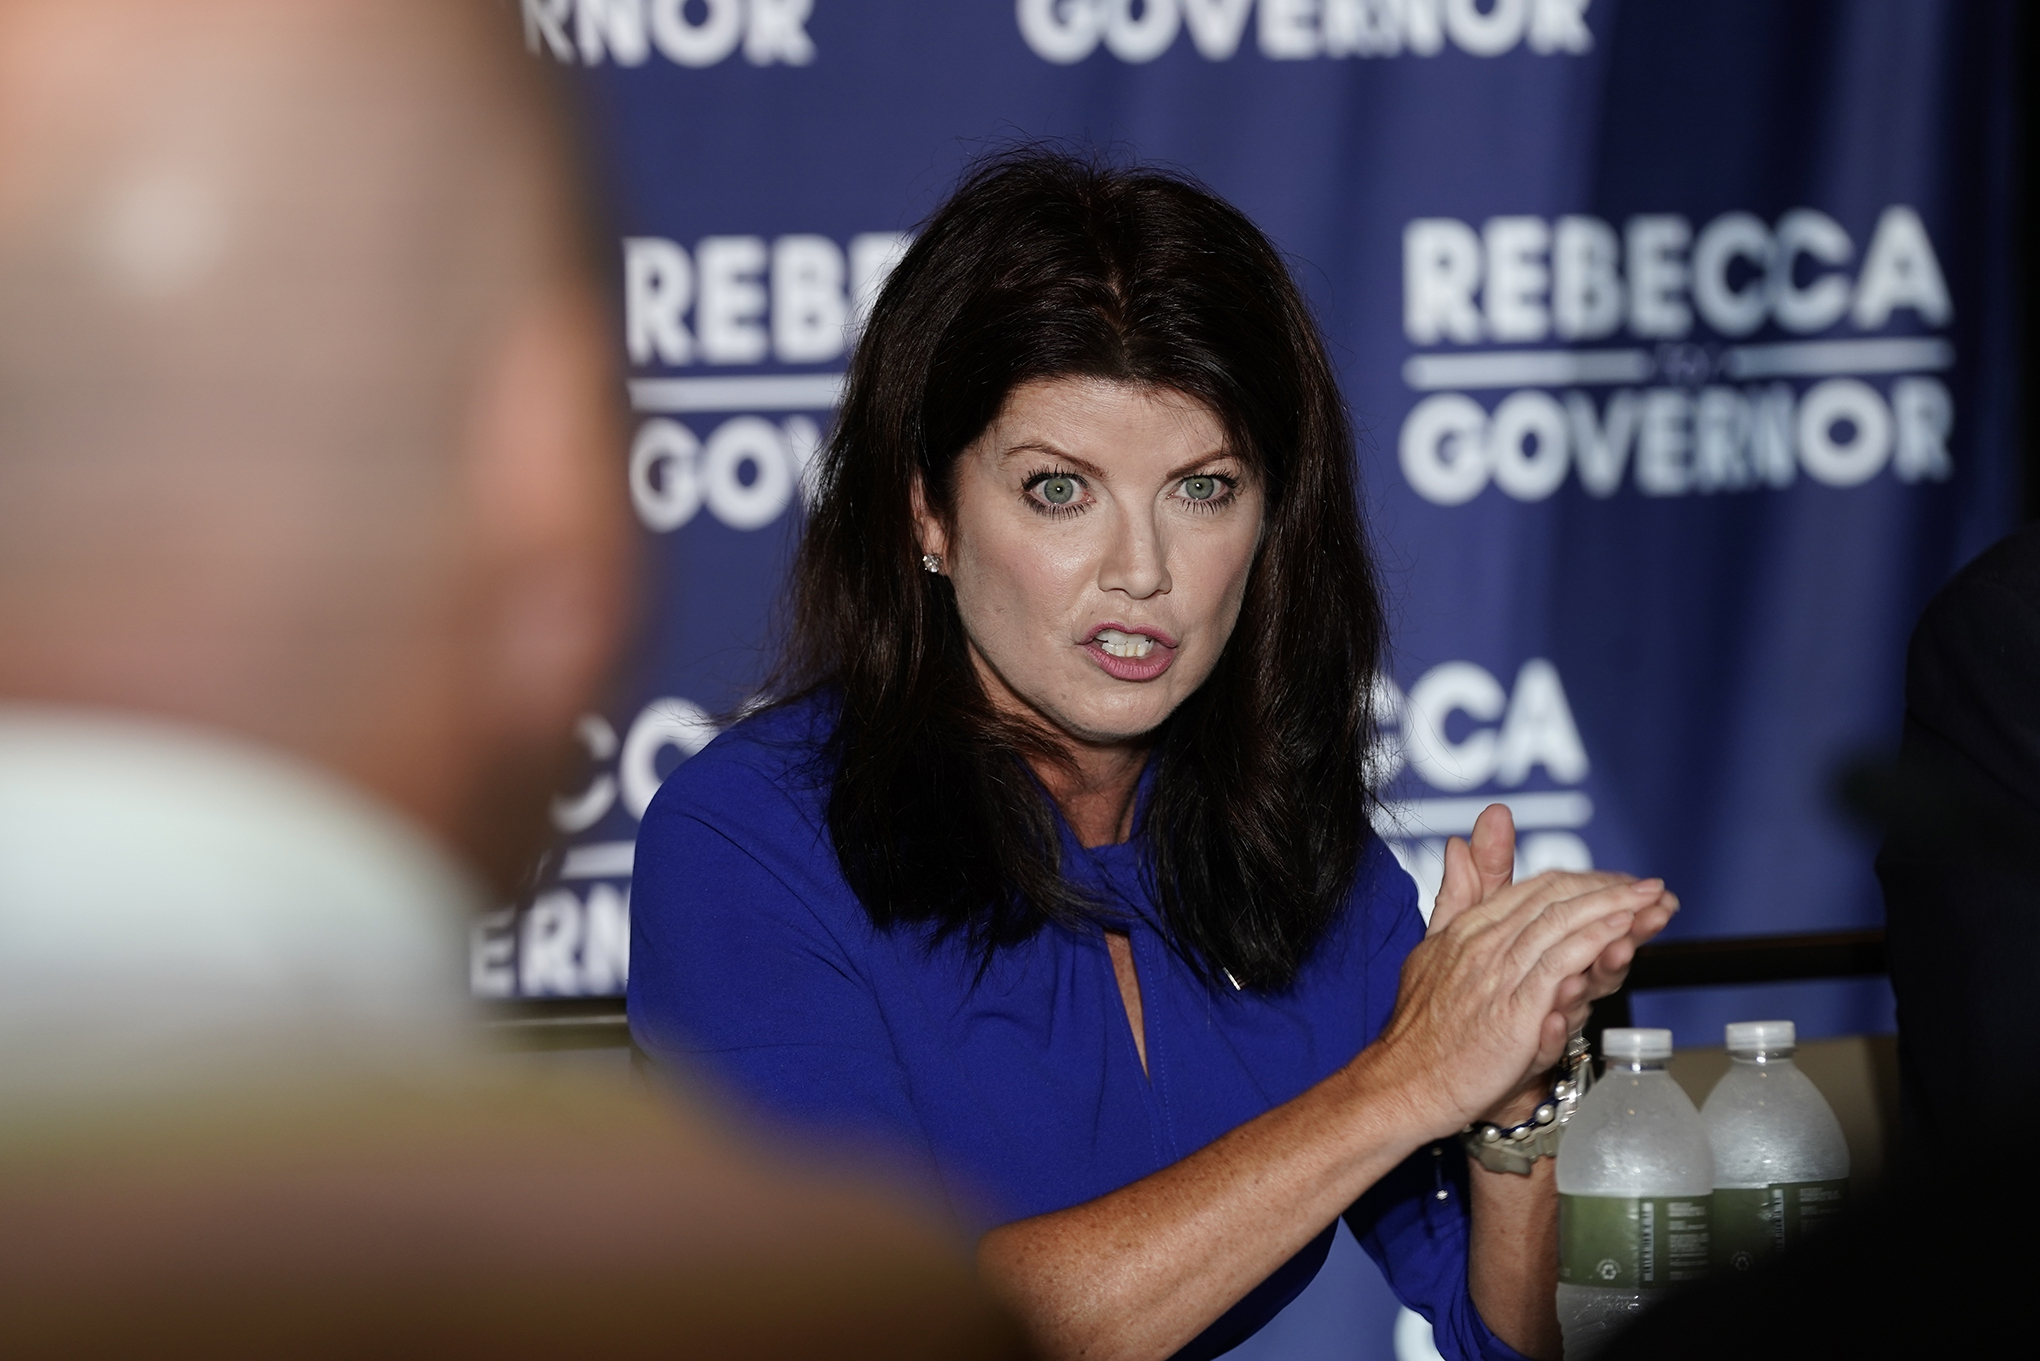 Wisconsin Republican gubernatorial candidate Rebecca Kleefisch